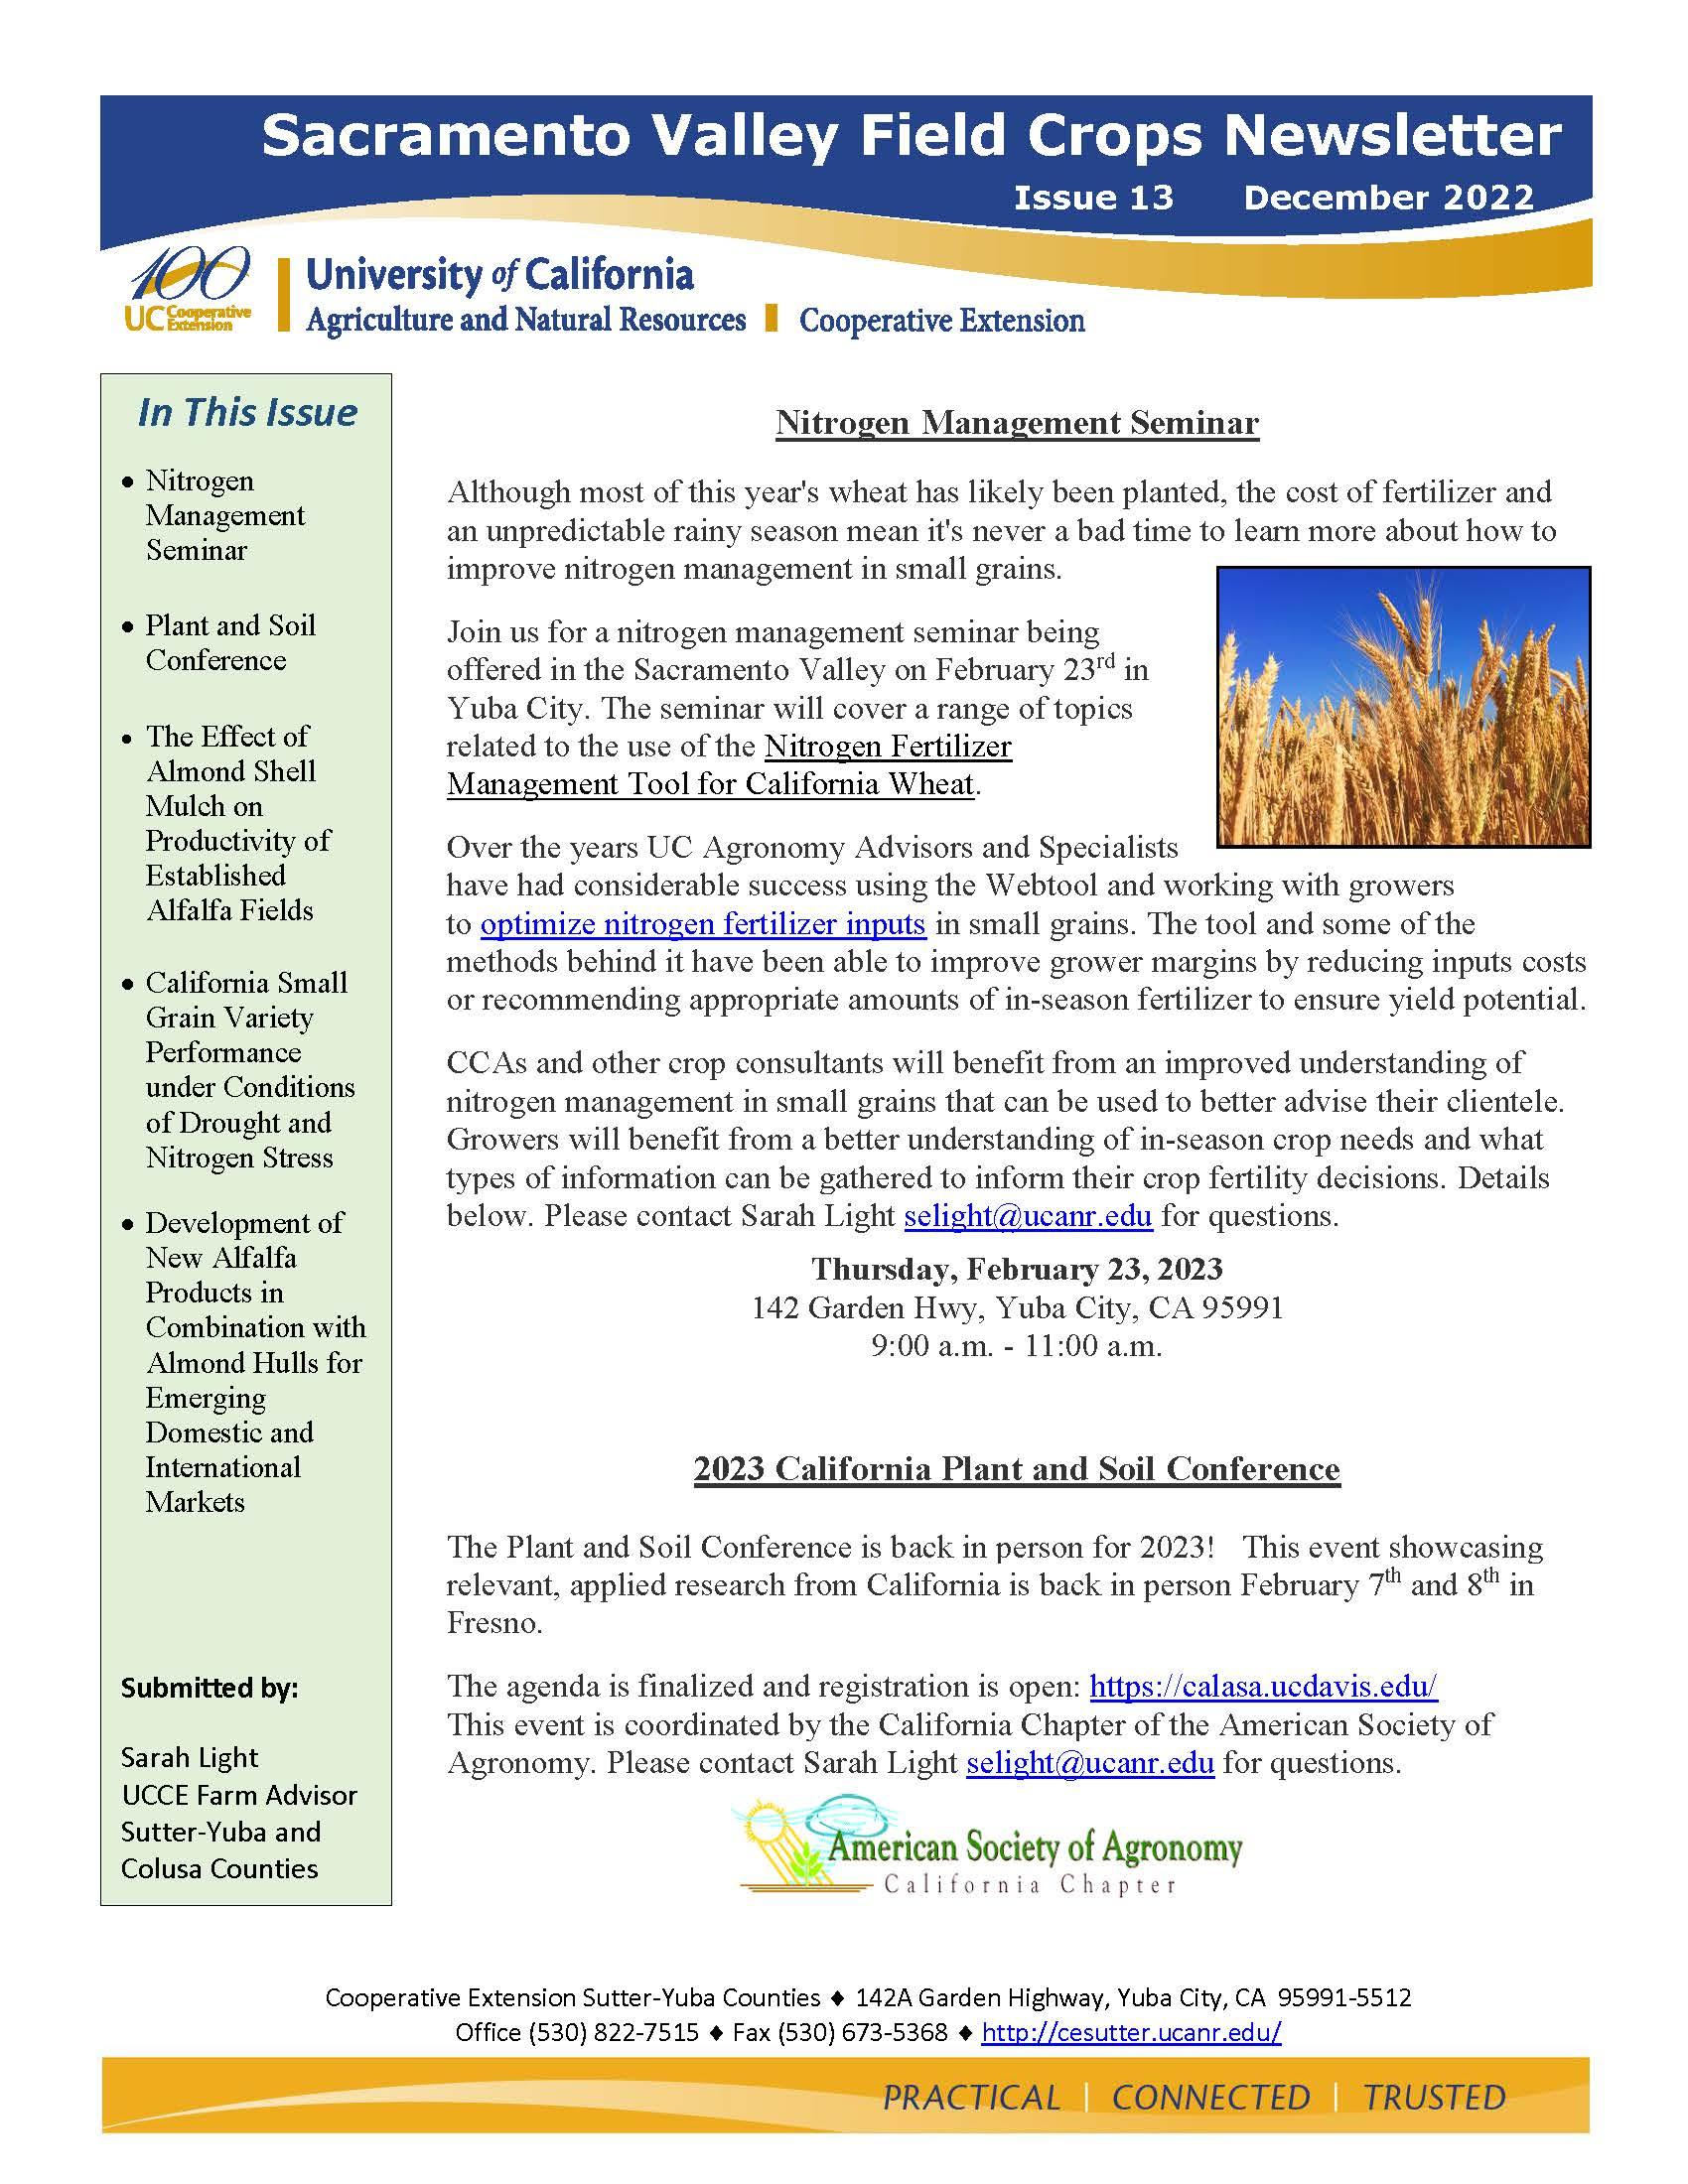 Sacramento Valley Field Crops Newsletter - December 2022_Page_1